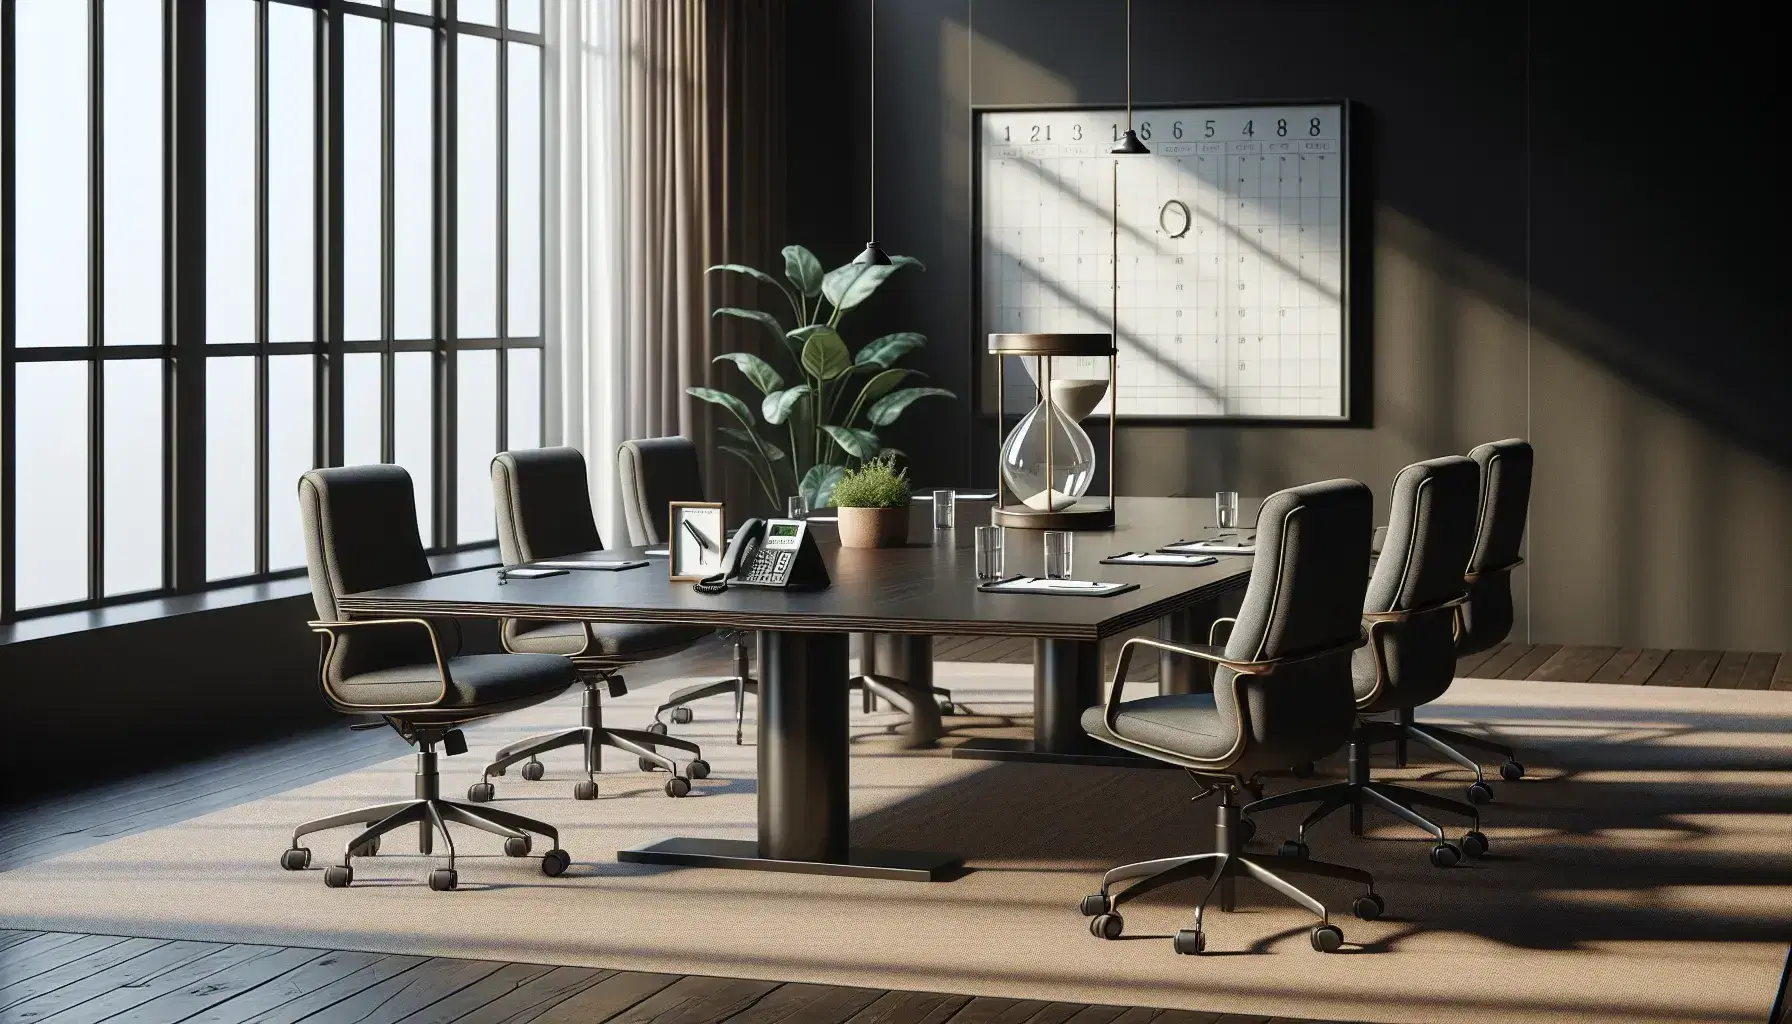 Sala de reuniones con mesa rectangular de madera oscura, seis sillas grises, reloj de arena blanco, calendario y teléfono negro, junto a ventana con cortinas y planta verde.